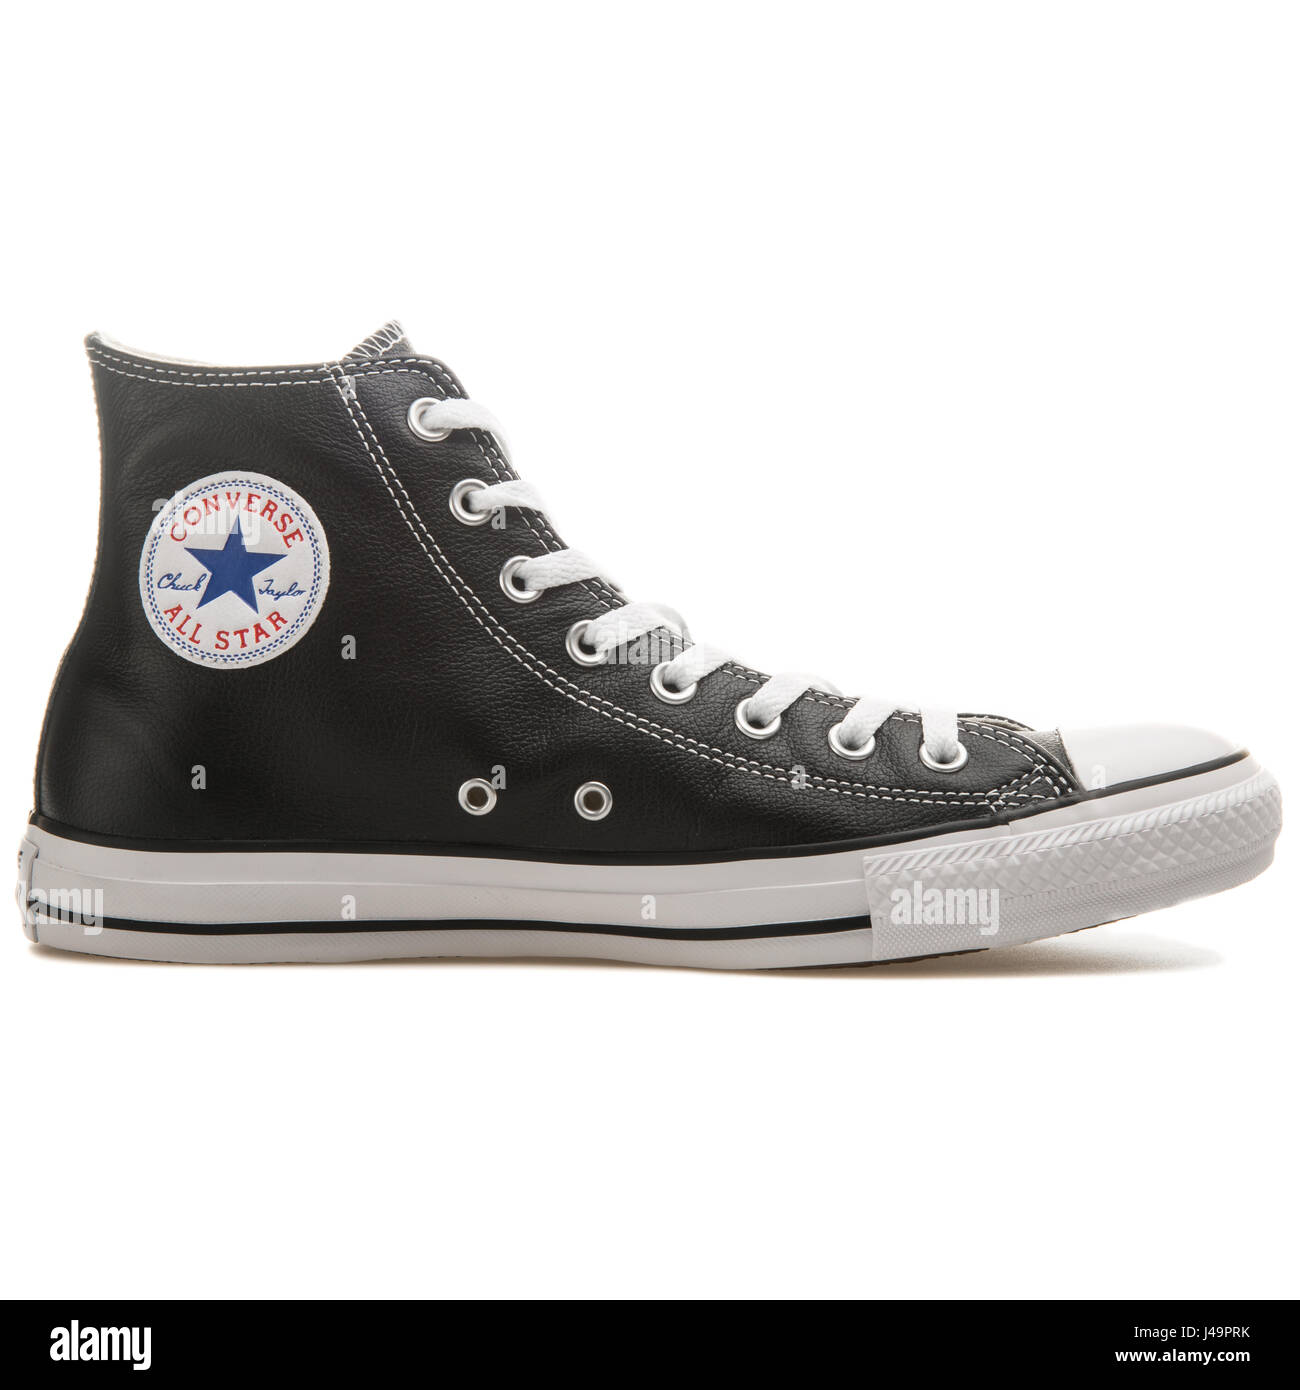 Converse Taylor All Star Hi Black Leather Shoe - 132170C Stock Photo - Alamy